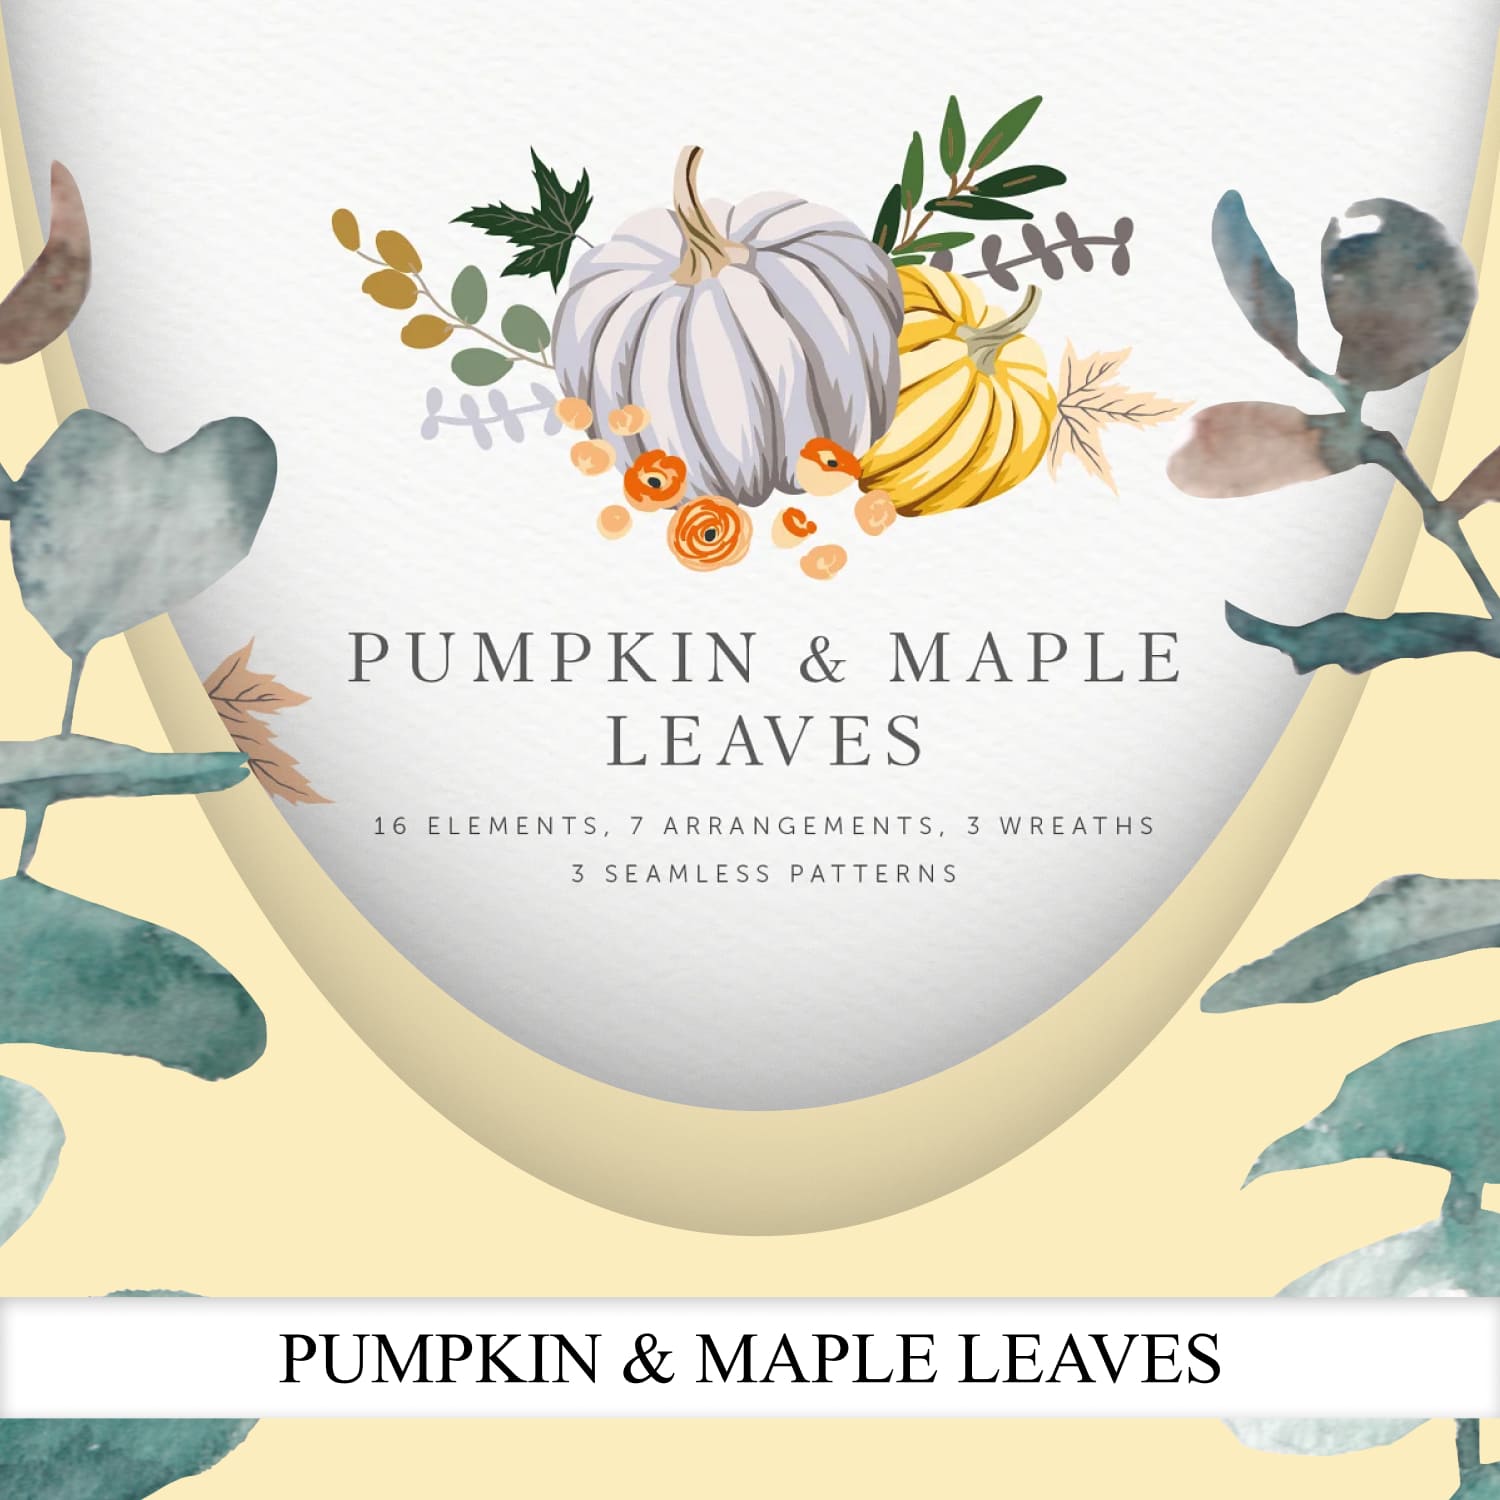 Pumpkin & Maple leaves.